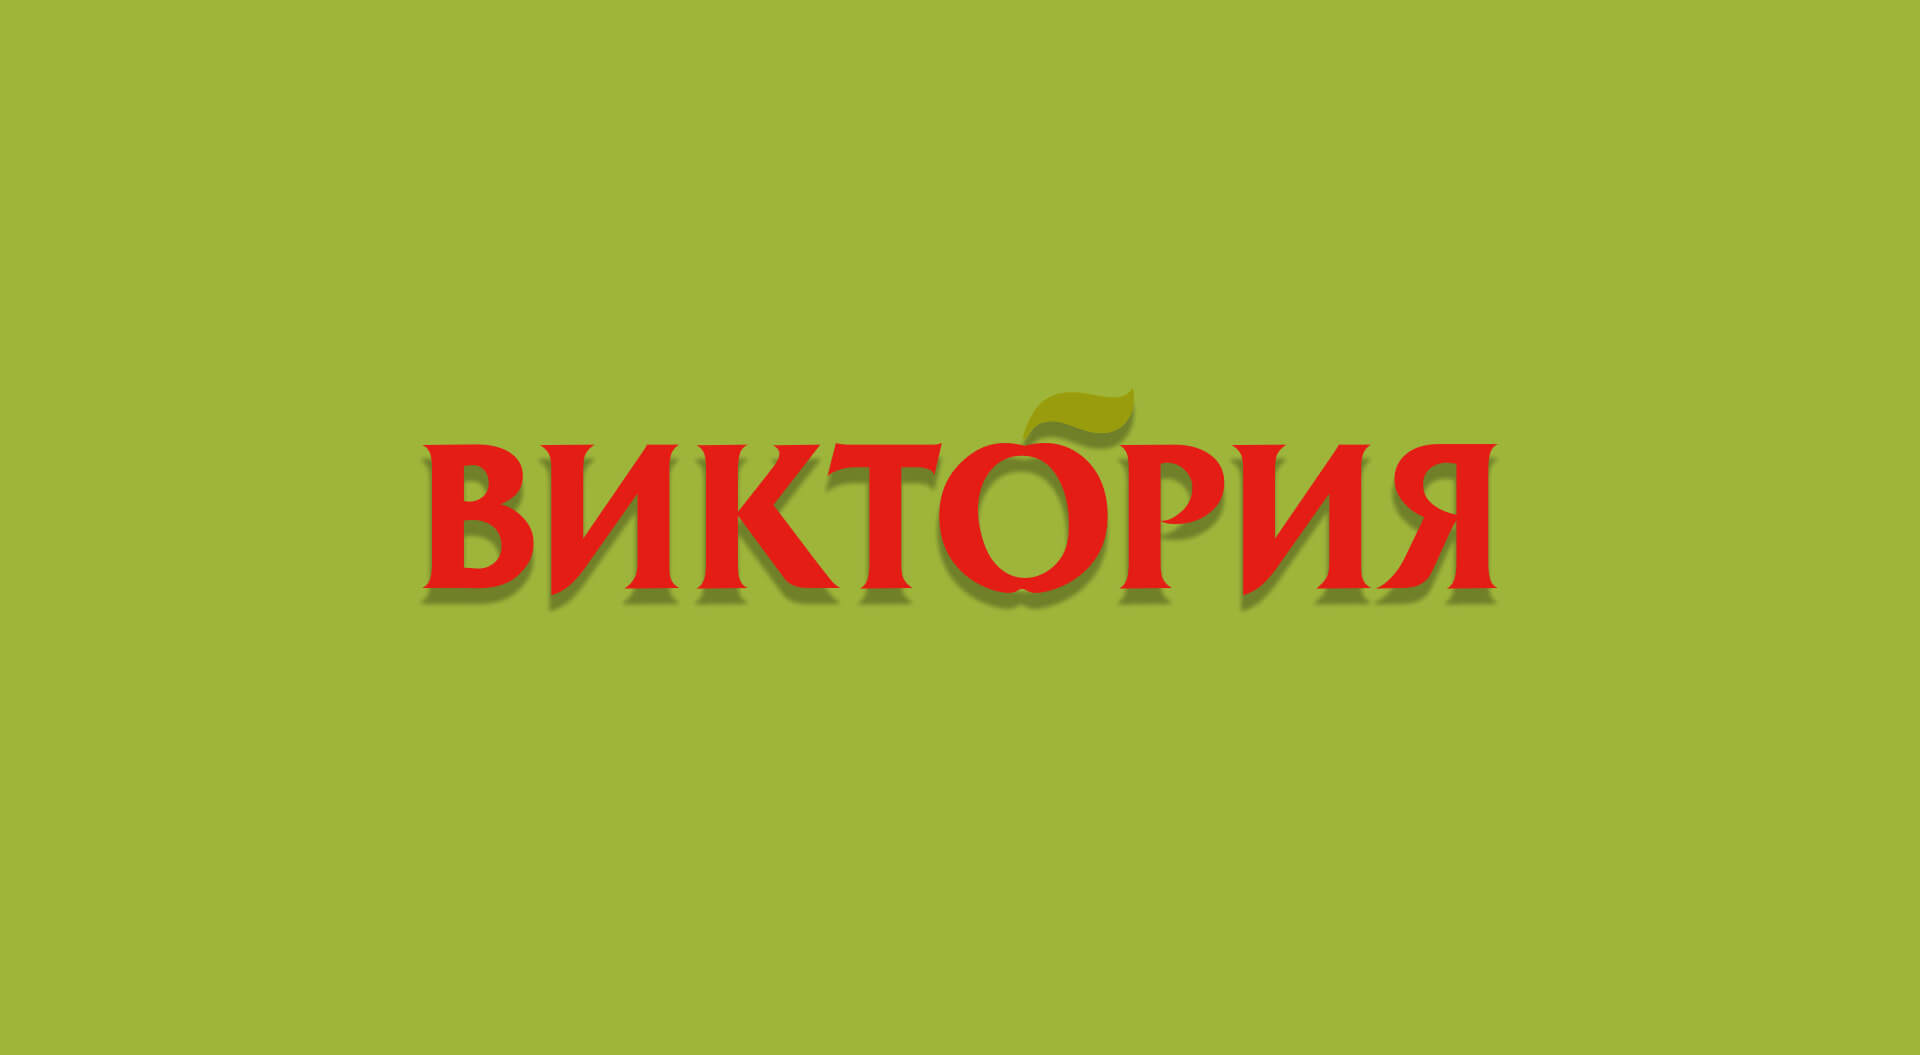 Victoria supermarkets Russian stores brand identity